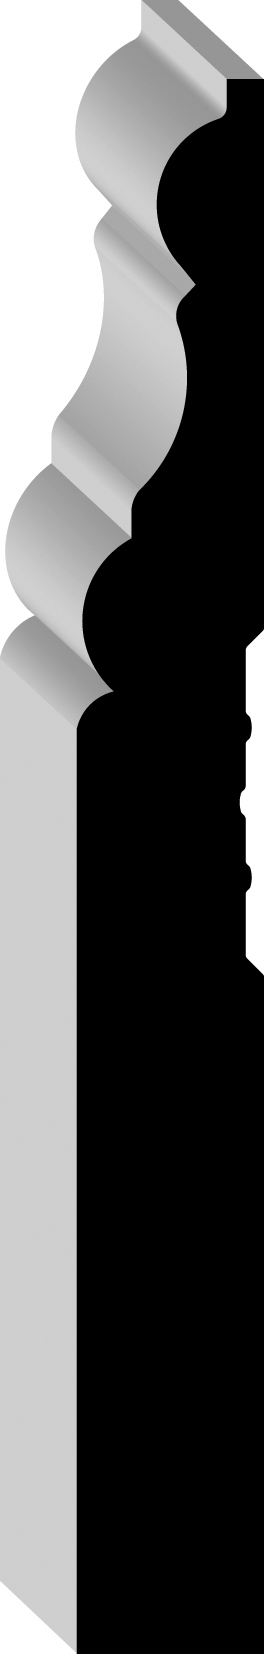 BB90414 - Hardware locks, Door Locks, Door handles, Knobs, Taymor Locks, Weiser Locks & Handles, Bathroom Hardware & Accessories, Cabinet Hardware, Home Hardware and railngs - The Moulding Store Inc. Calgary CANADA